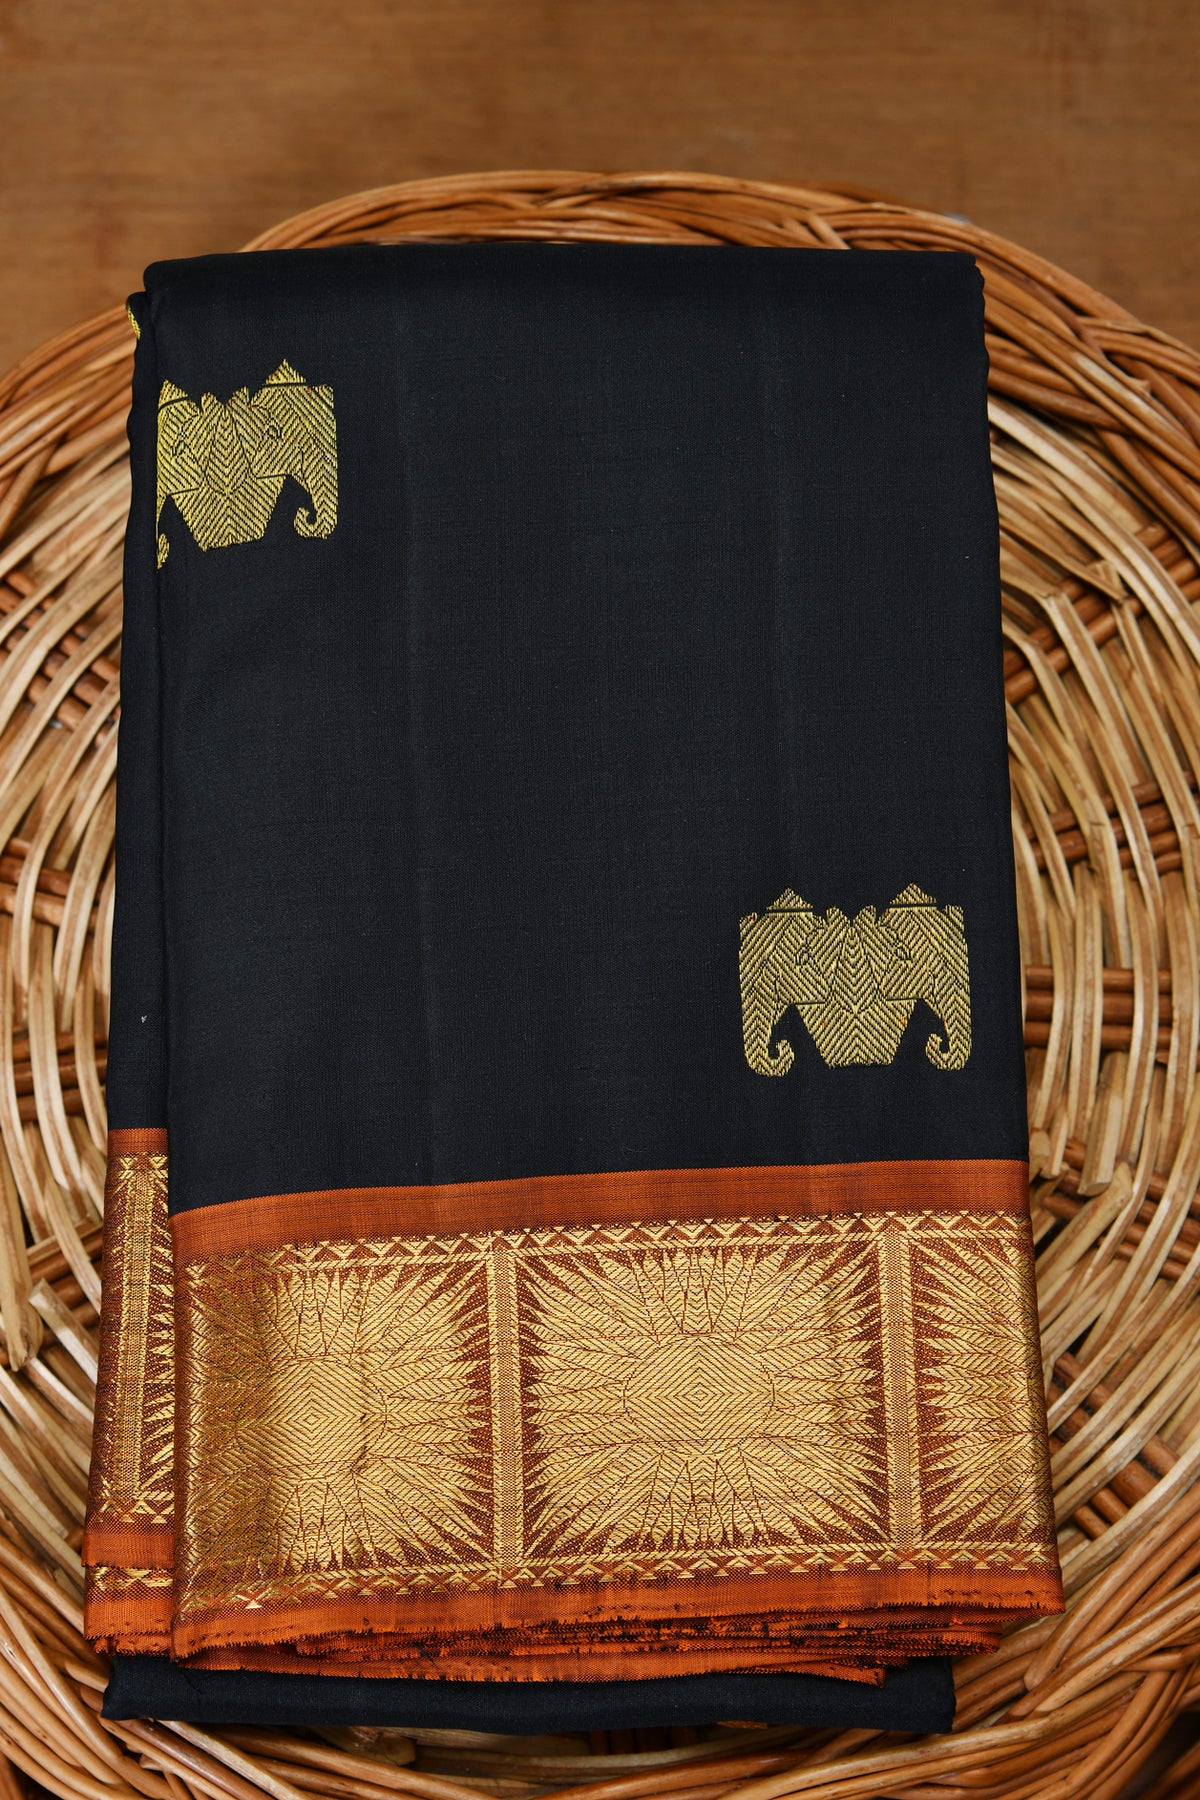 Irattaithalai Elephant Motif Black Kanchipuram Silk Saree